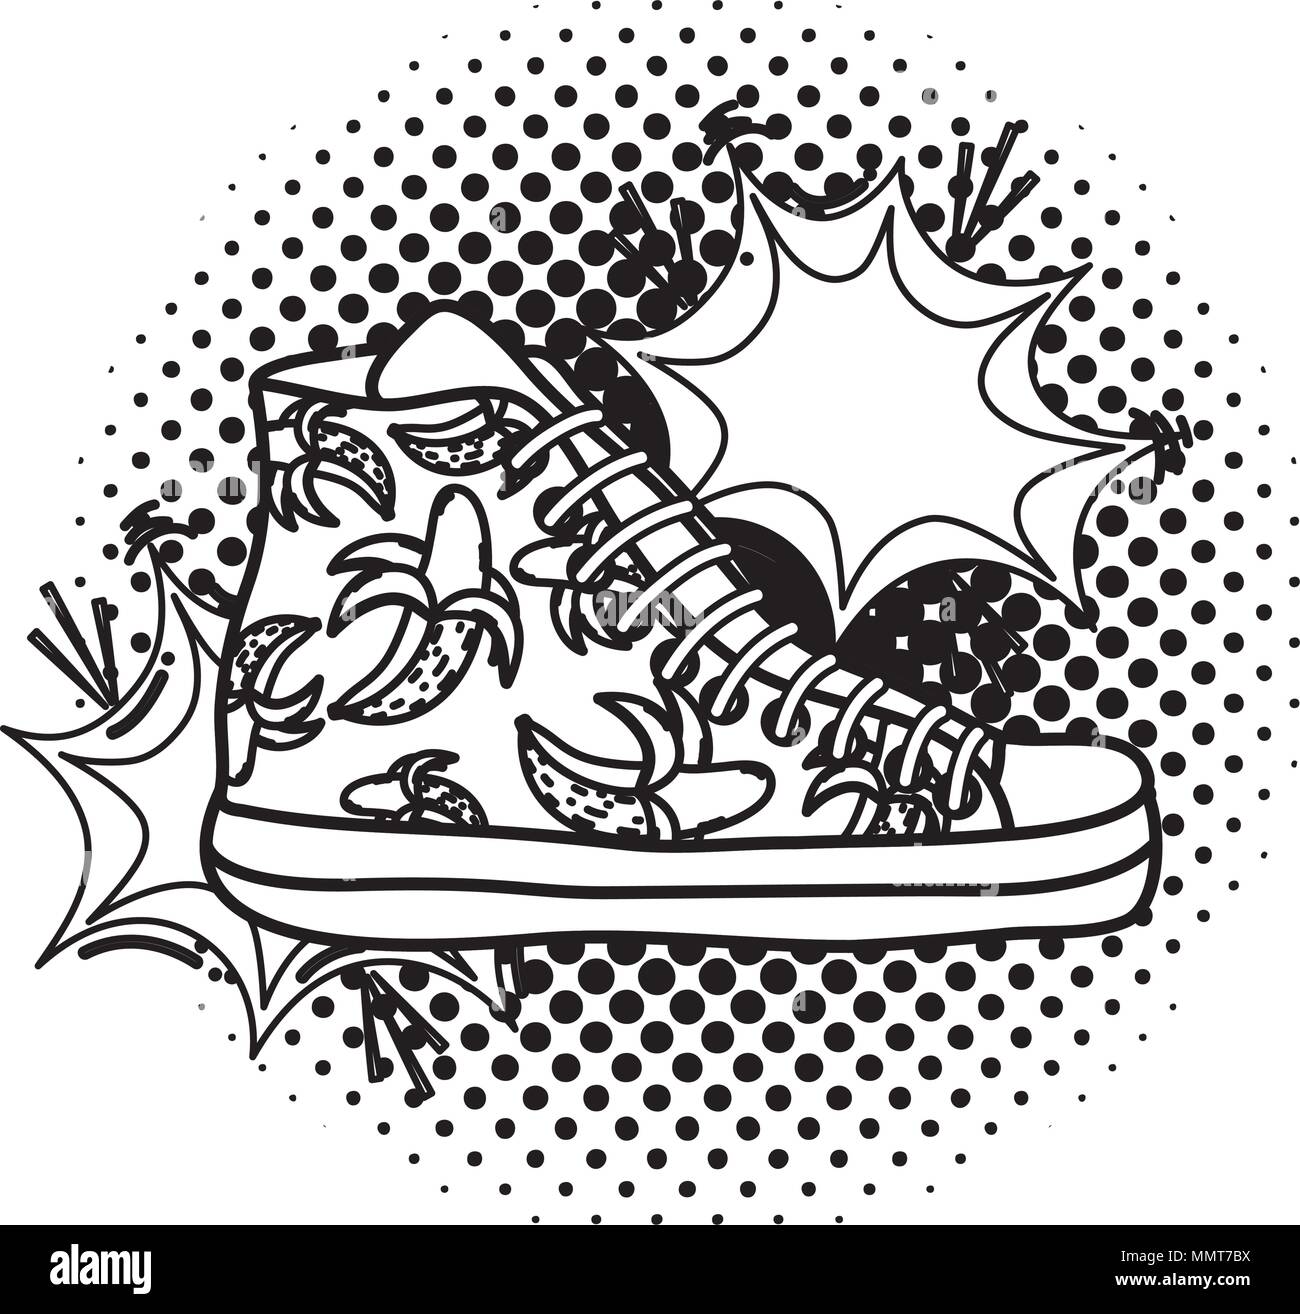 Line sneakers Schuhe mit Mode pop art Stock-Vektorgrafik - Alamy